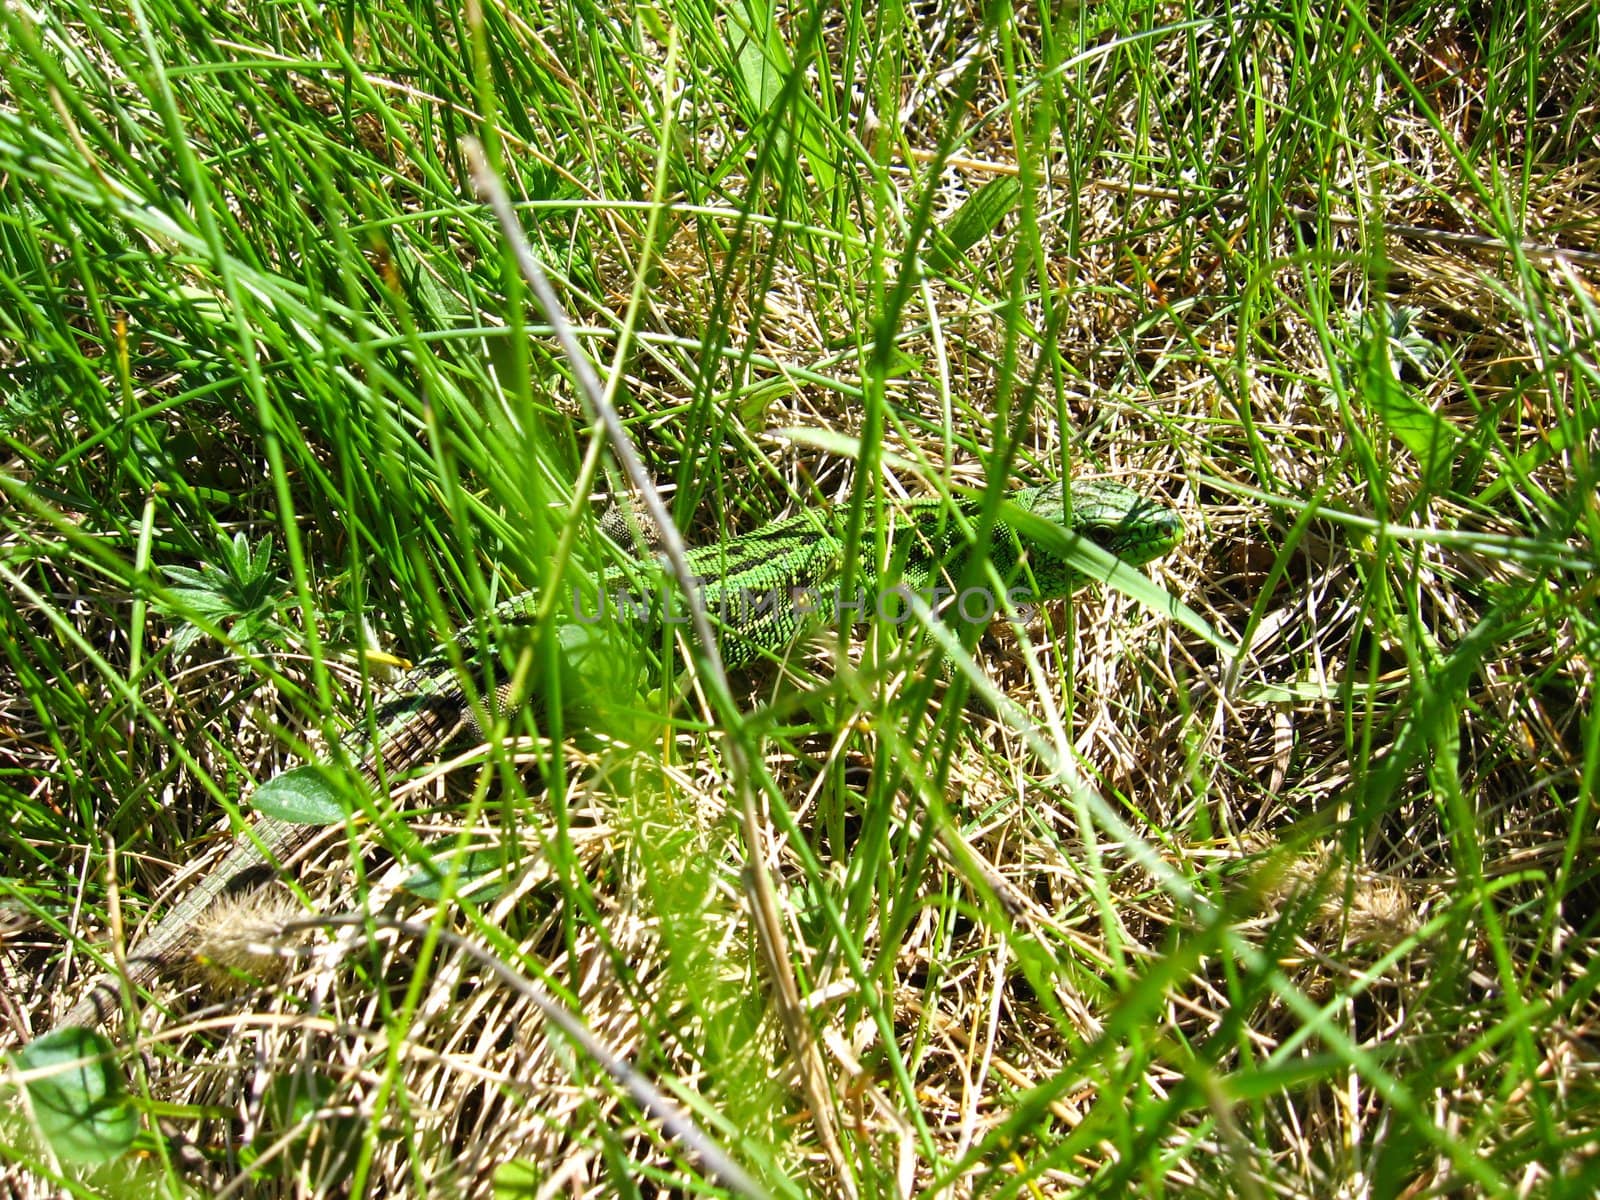 The green lizard in a green grass by alexmak